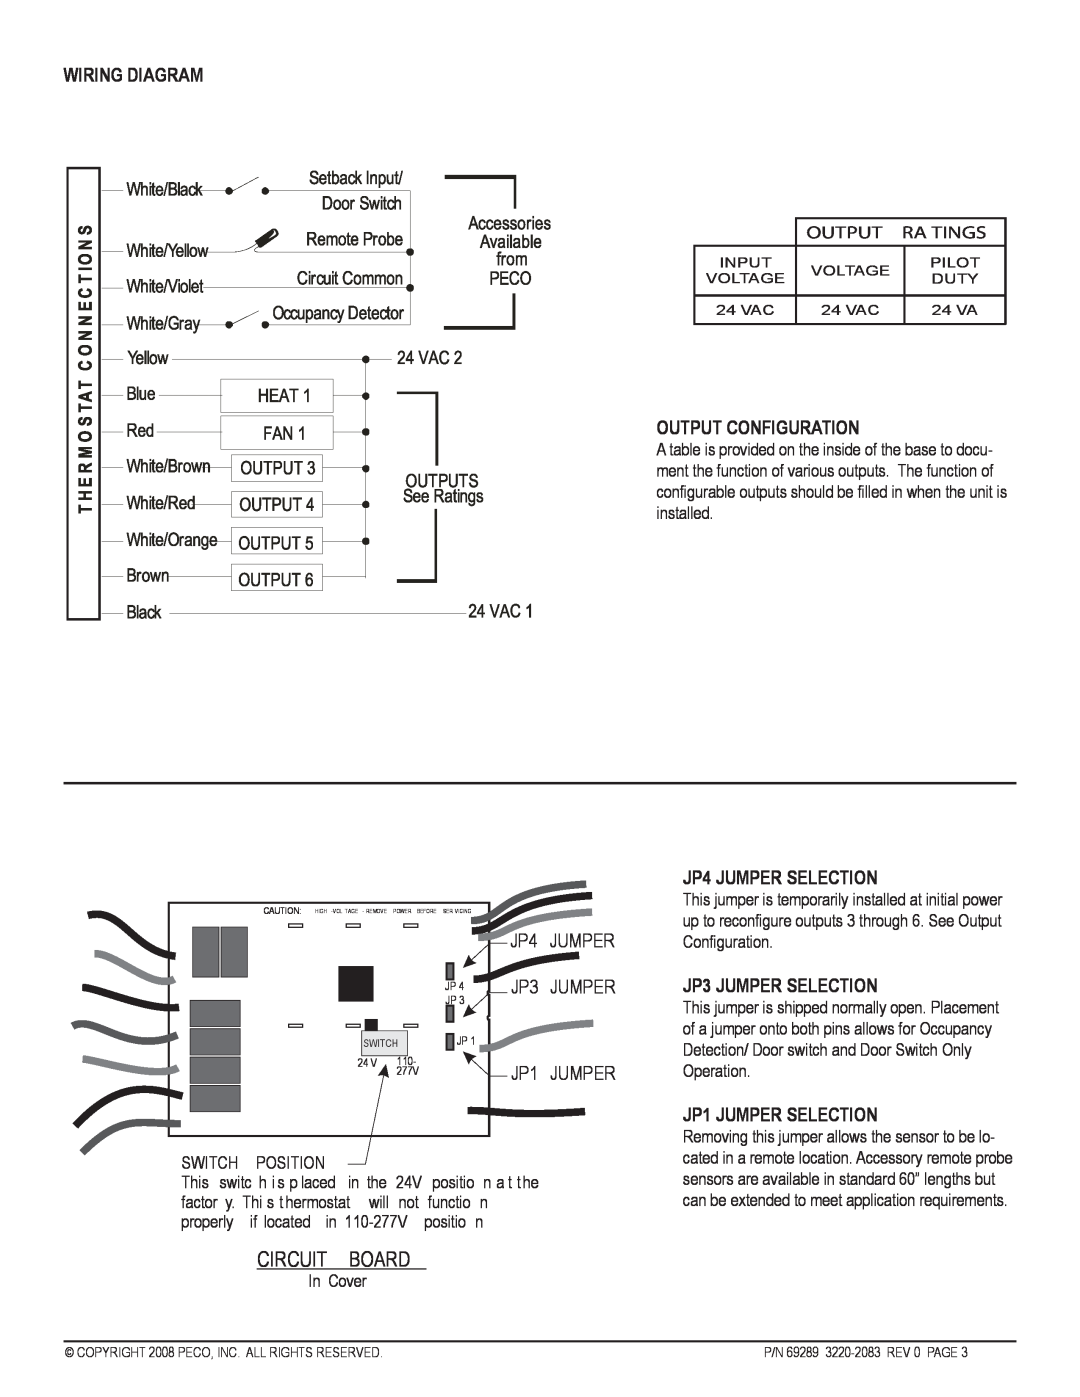 Pecoware TC170 Wiring Diagram, Output Configuration, JP4 JUMPER SELECTION, JP3 JUMPER SELECTION, JP1 JUMPER SELECTION 